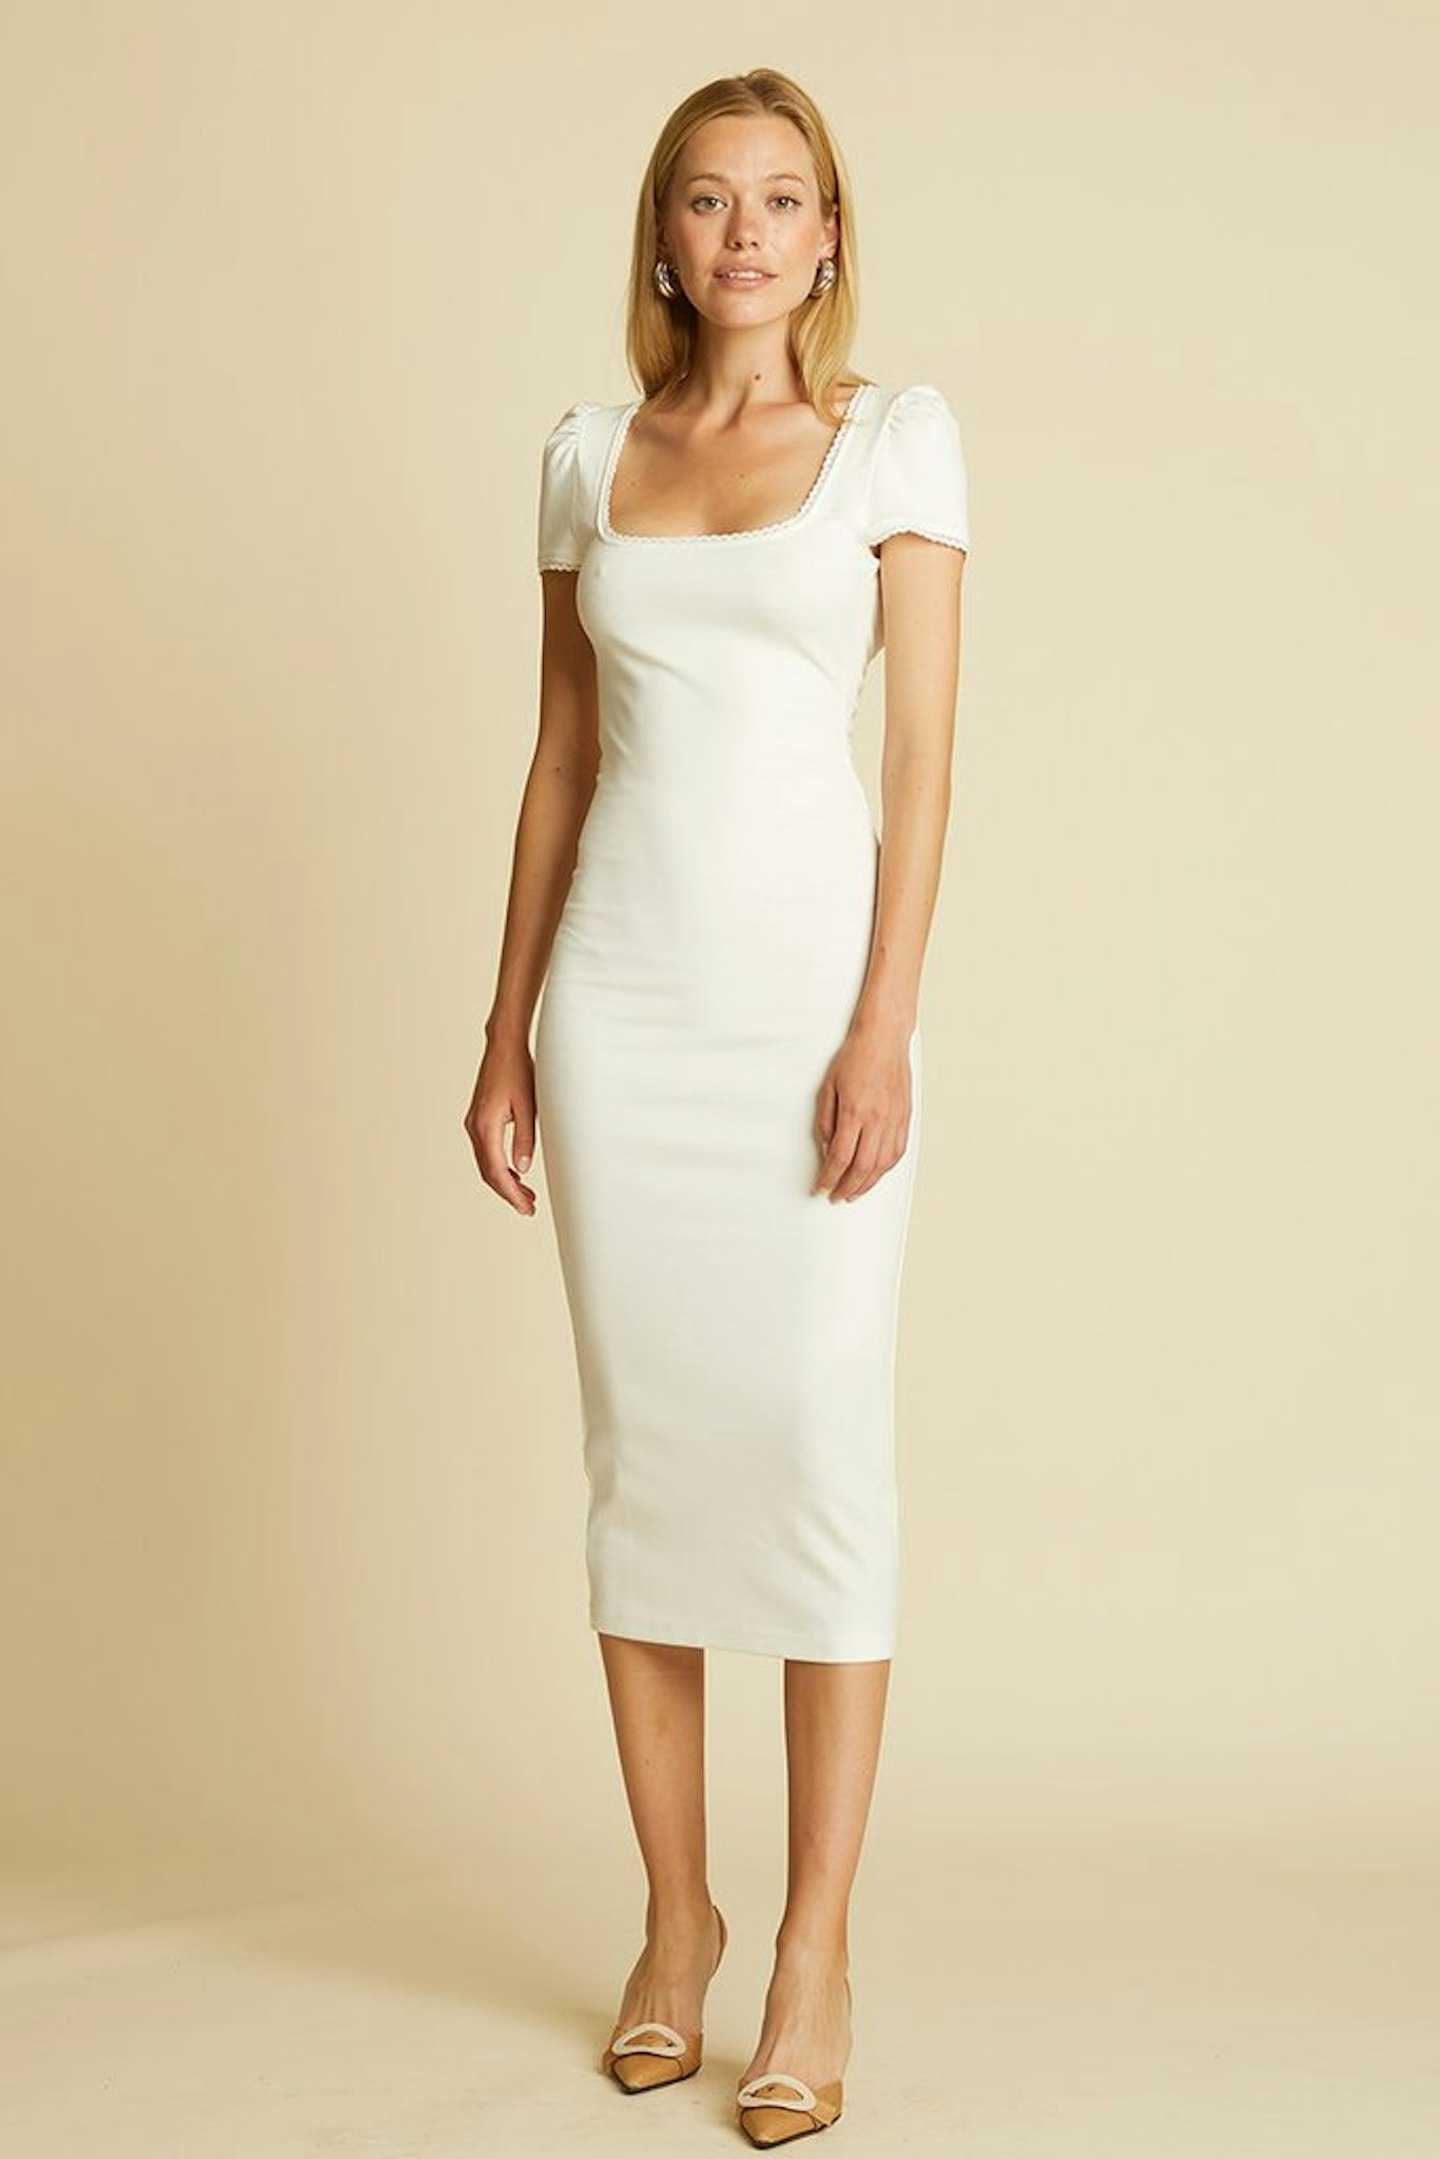 The Line By K,  Simone White Dress, £93